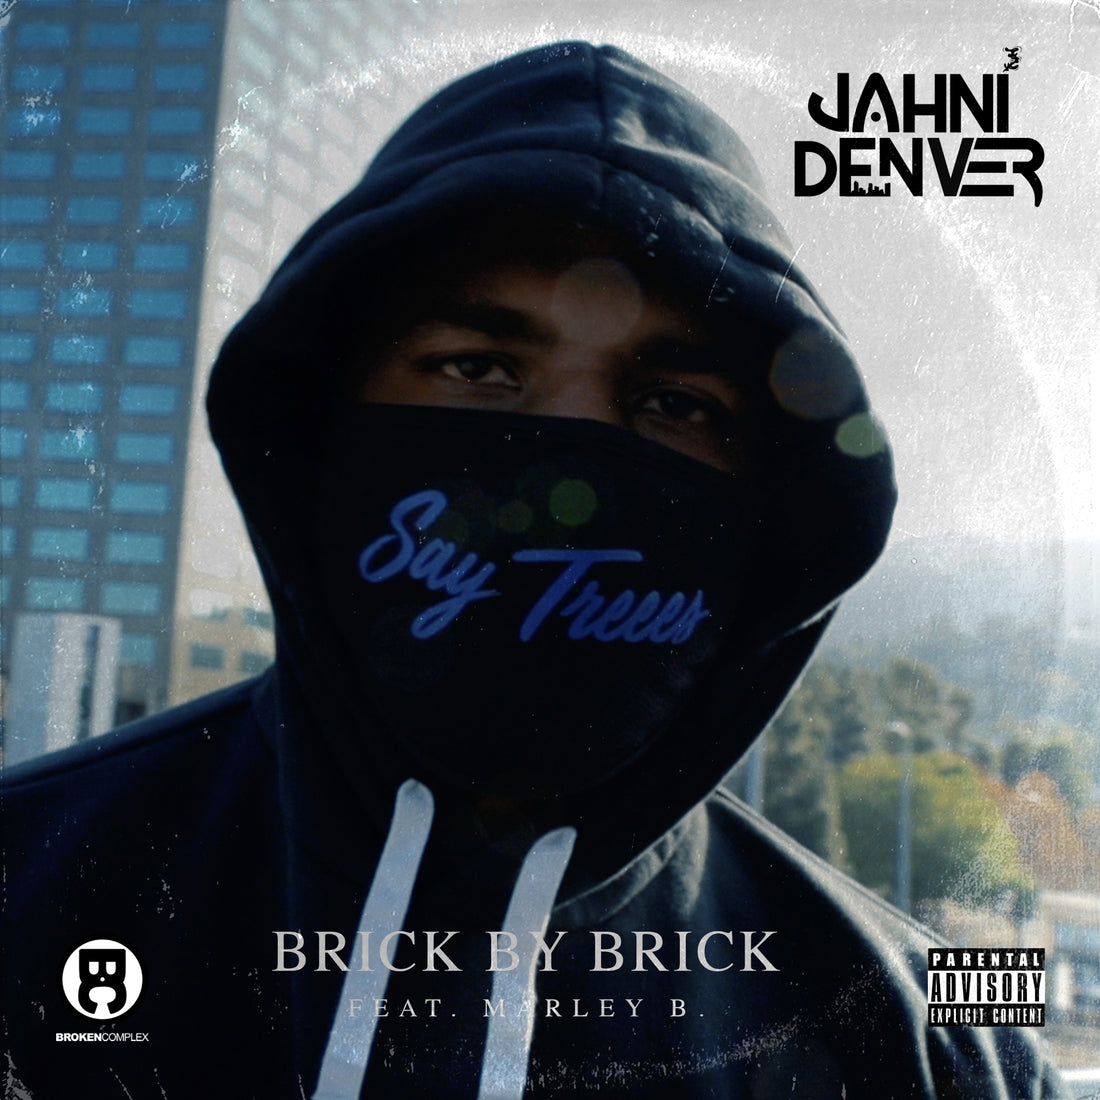 New Video + Single: Jahni Denver "Brick By Brick" feat. Marley B.